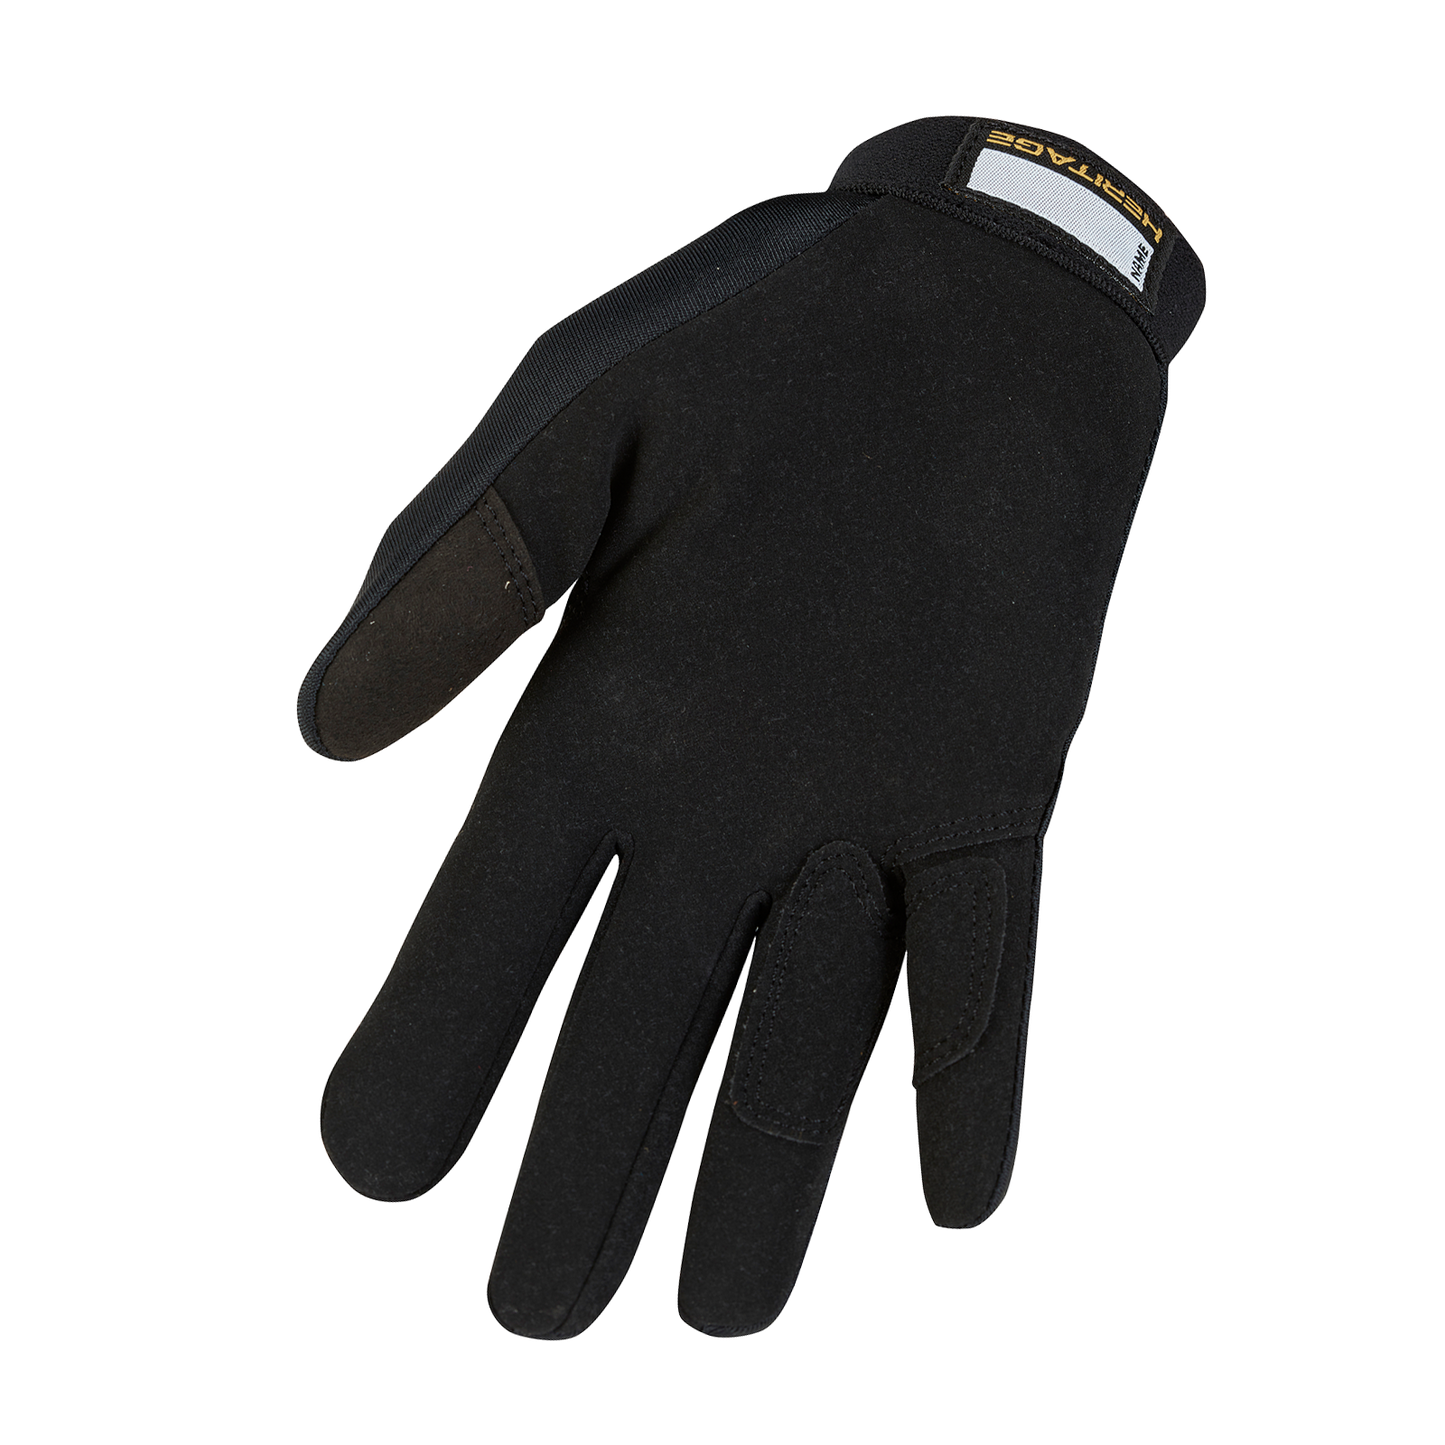 Performance Glove Black by Heritage